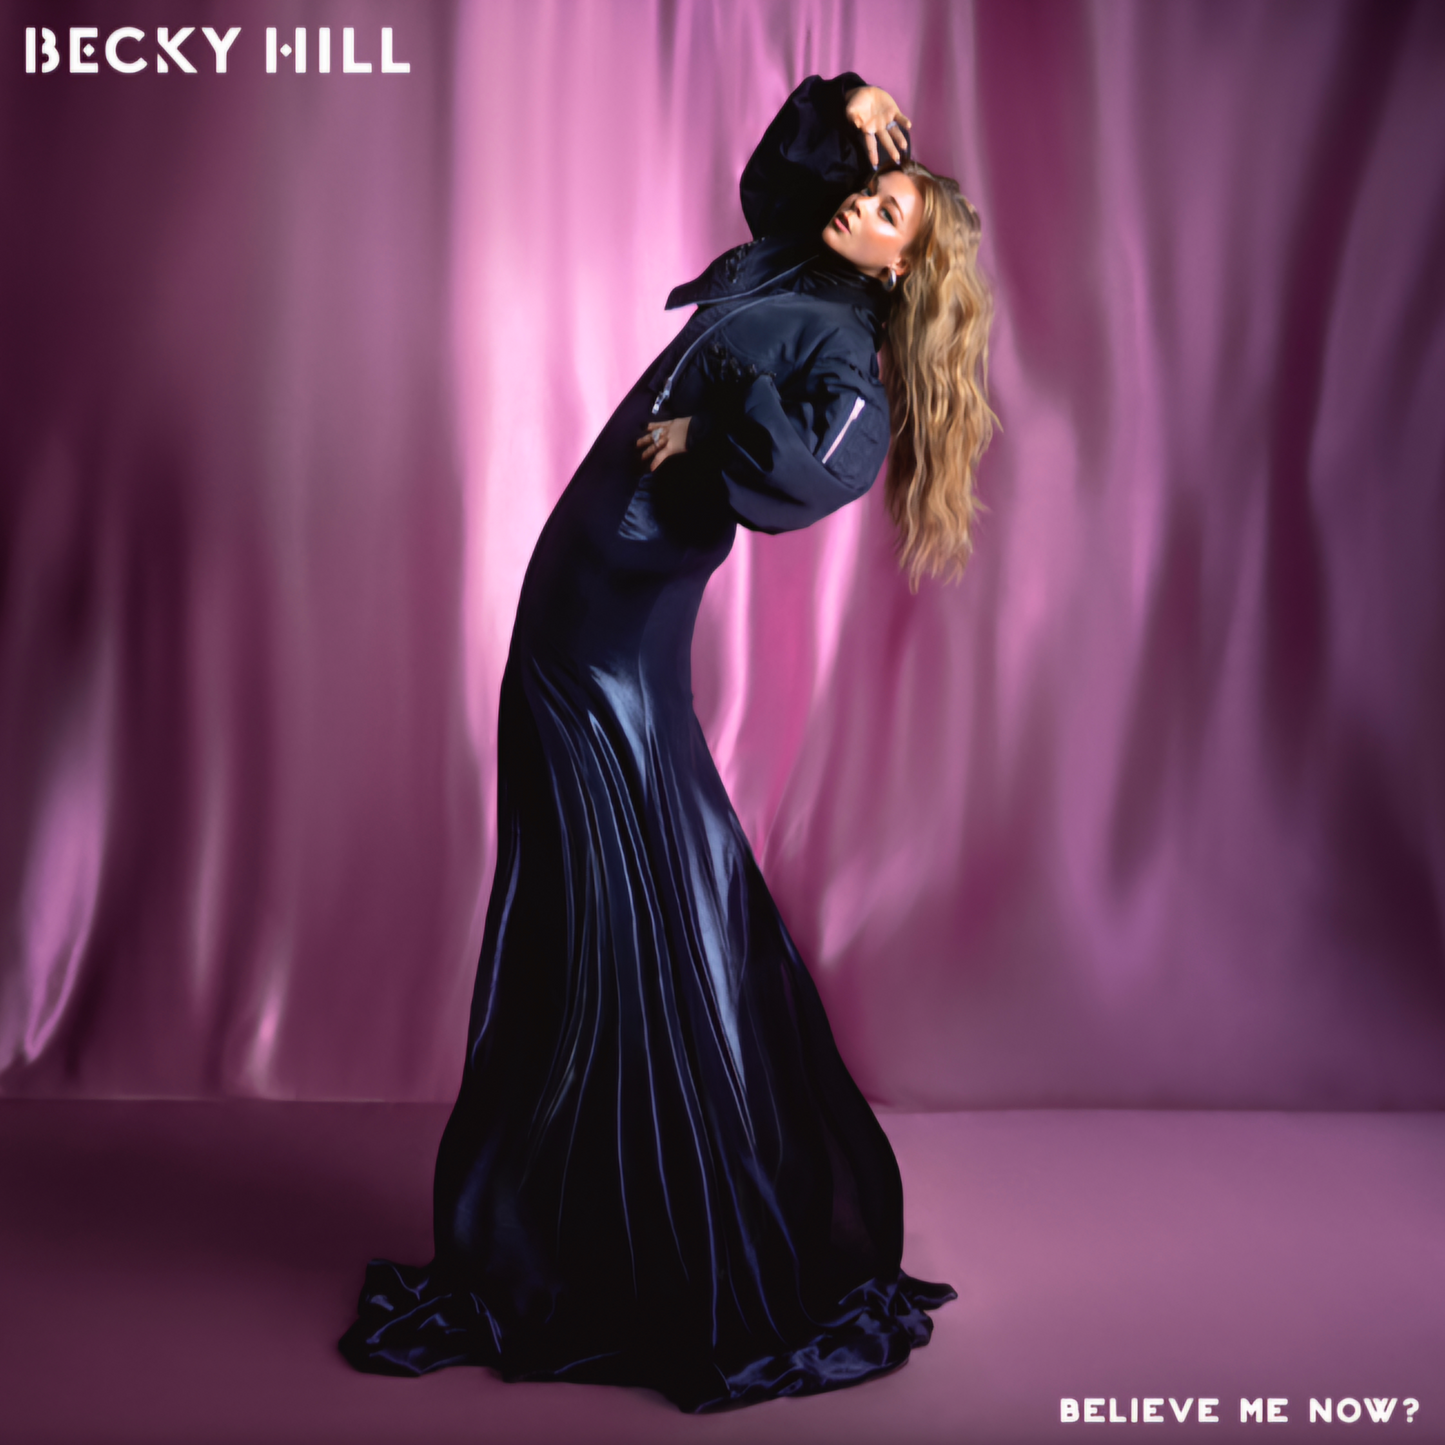 SIGNED Becky Hill: Believe Me Now? - Alt Art CD + Signed Card